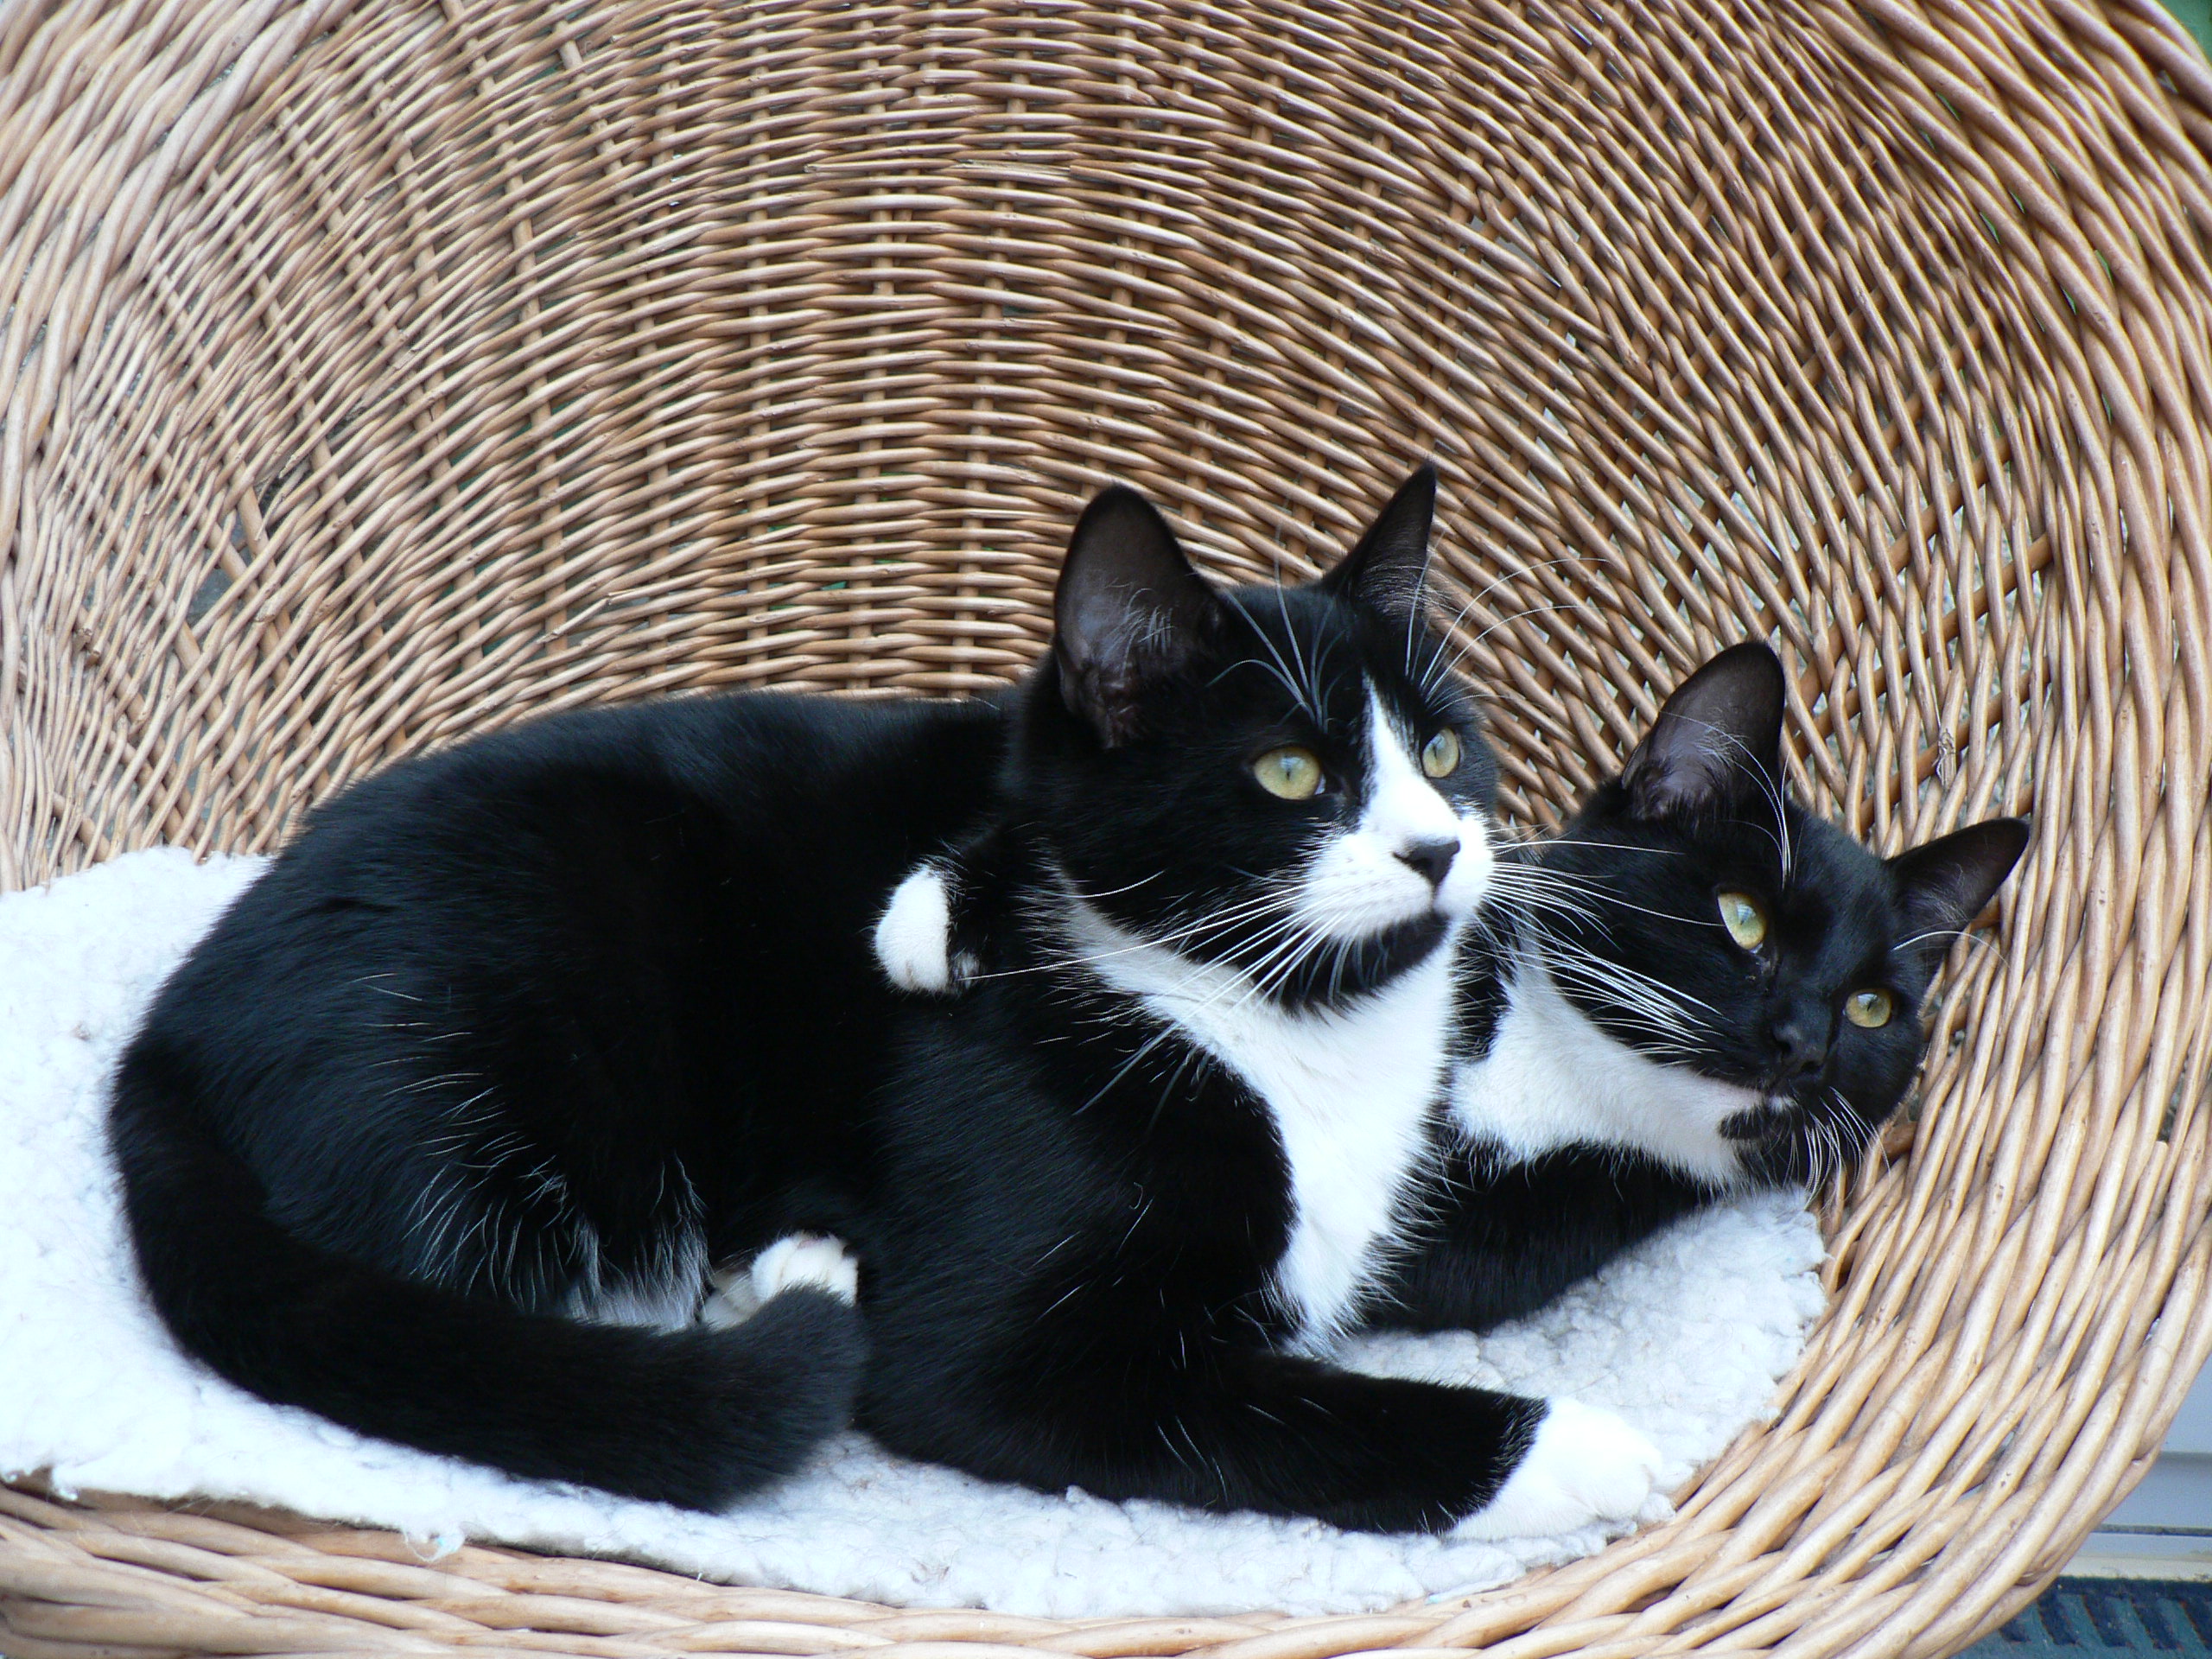 Boris and Baxter - Joe Saxton's cats